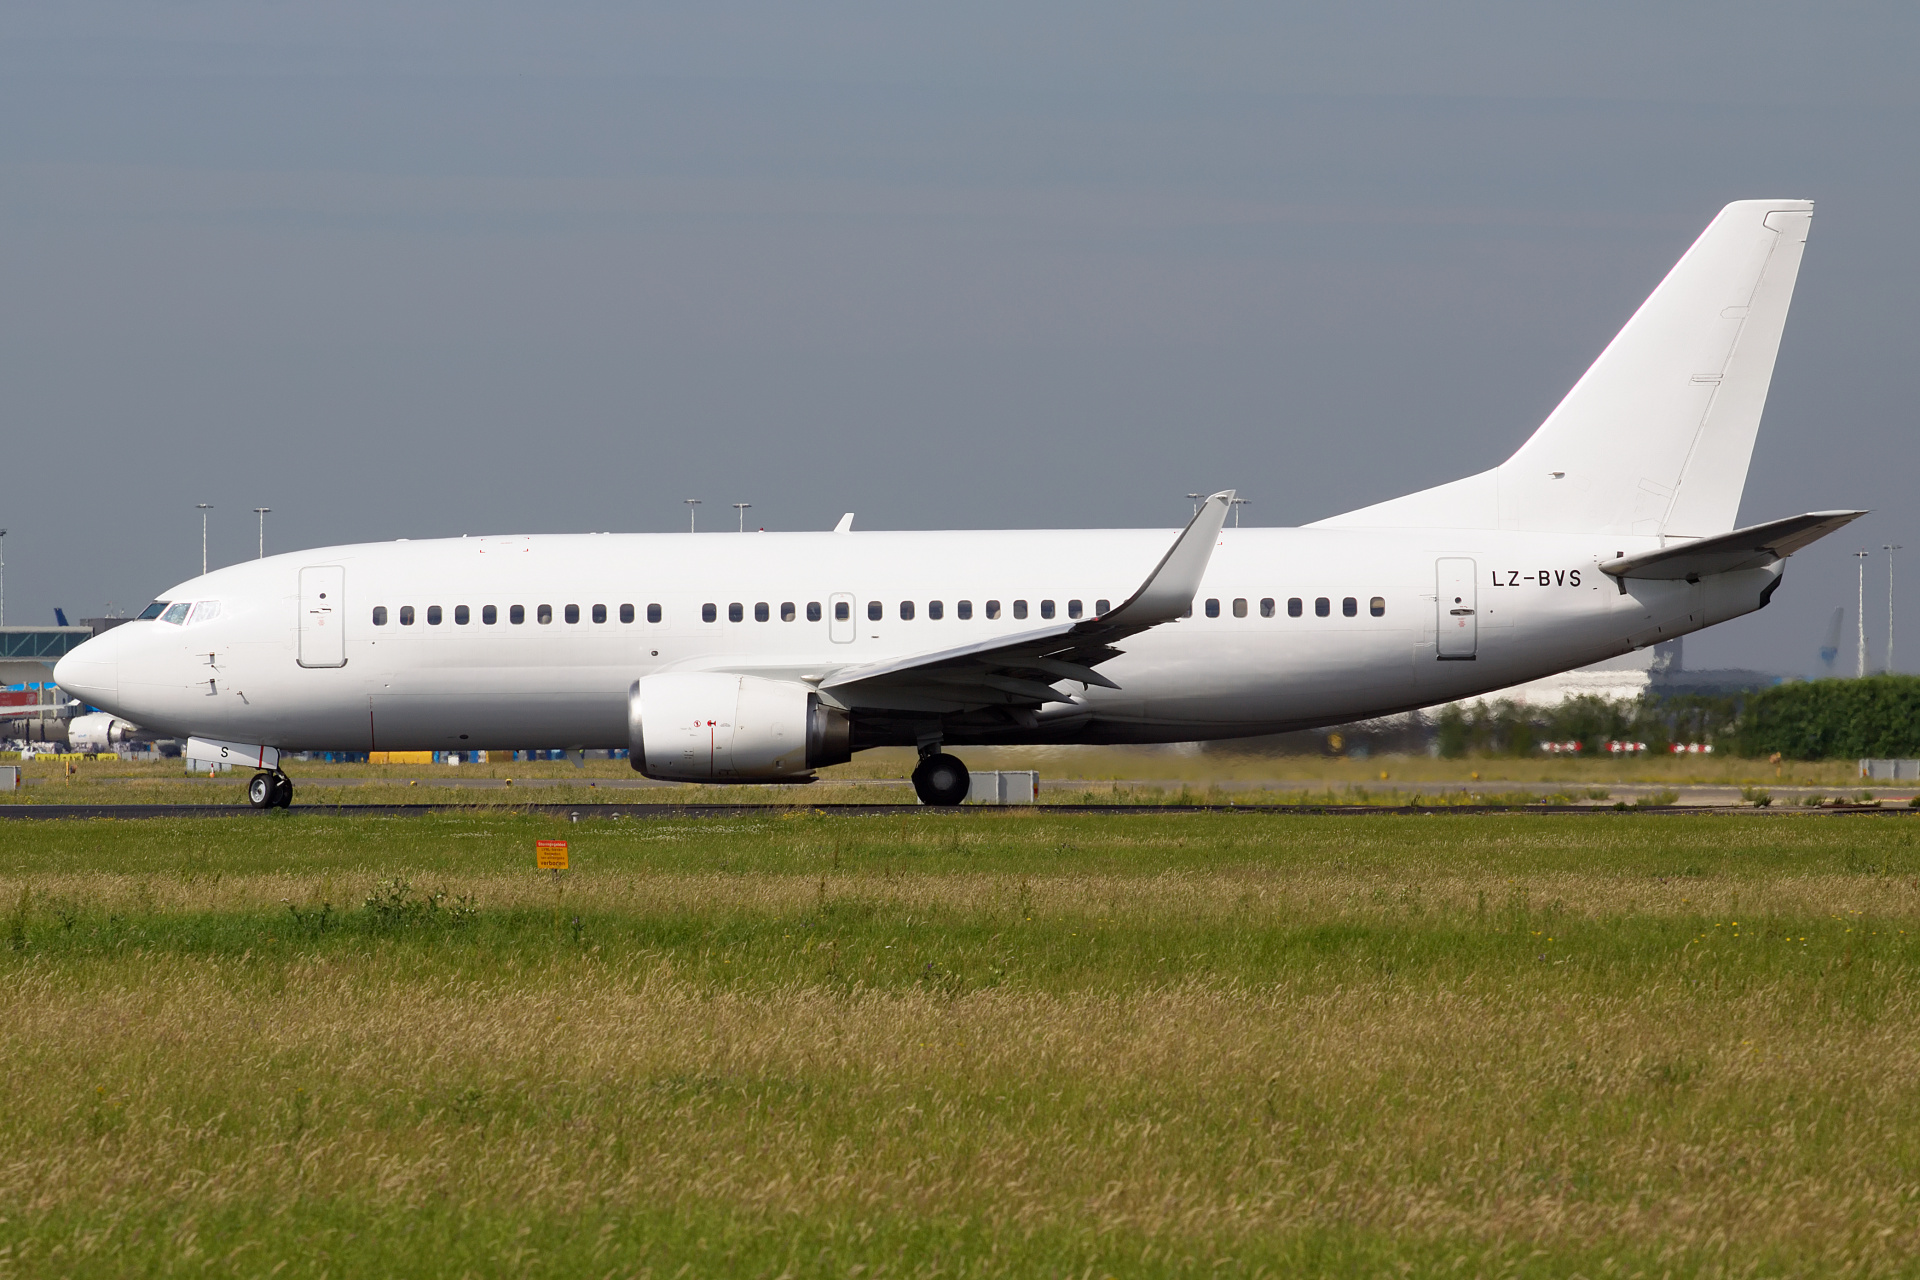 LZ-BVS, Bul Air (Aircraft » Schiphol Spotting » Boeing 737-300)